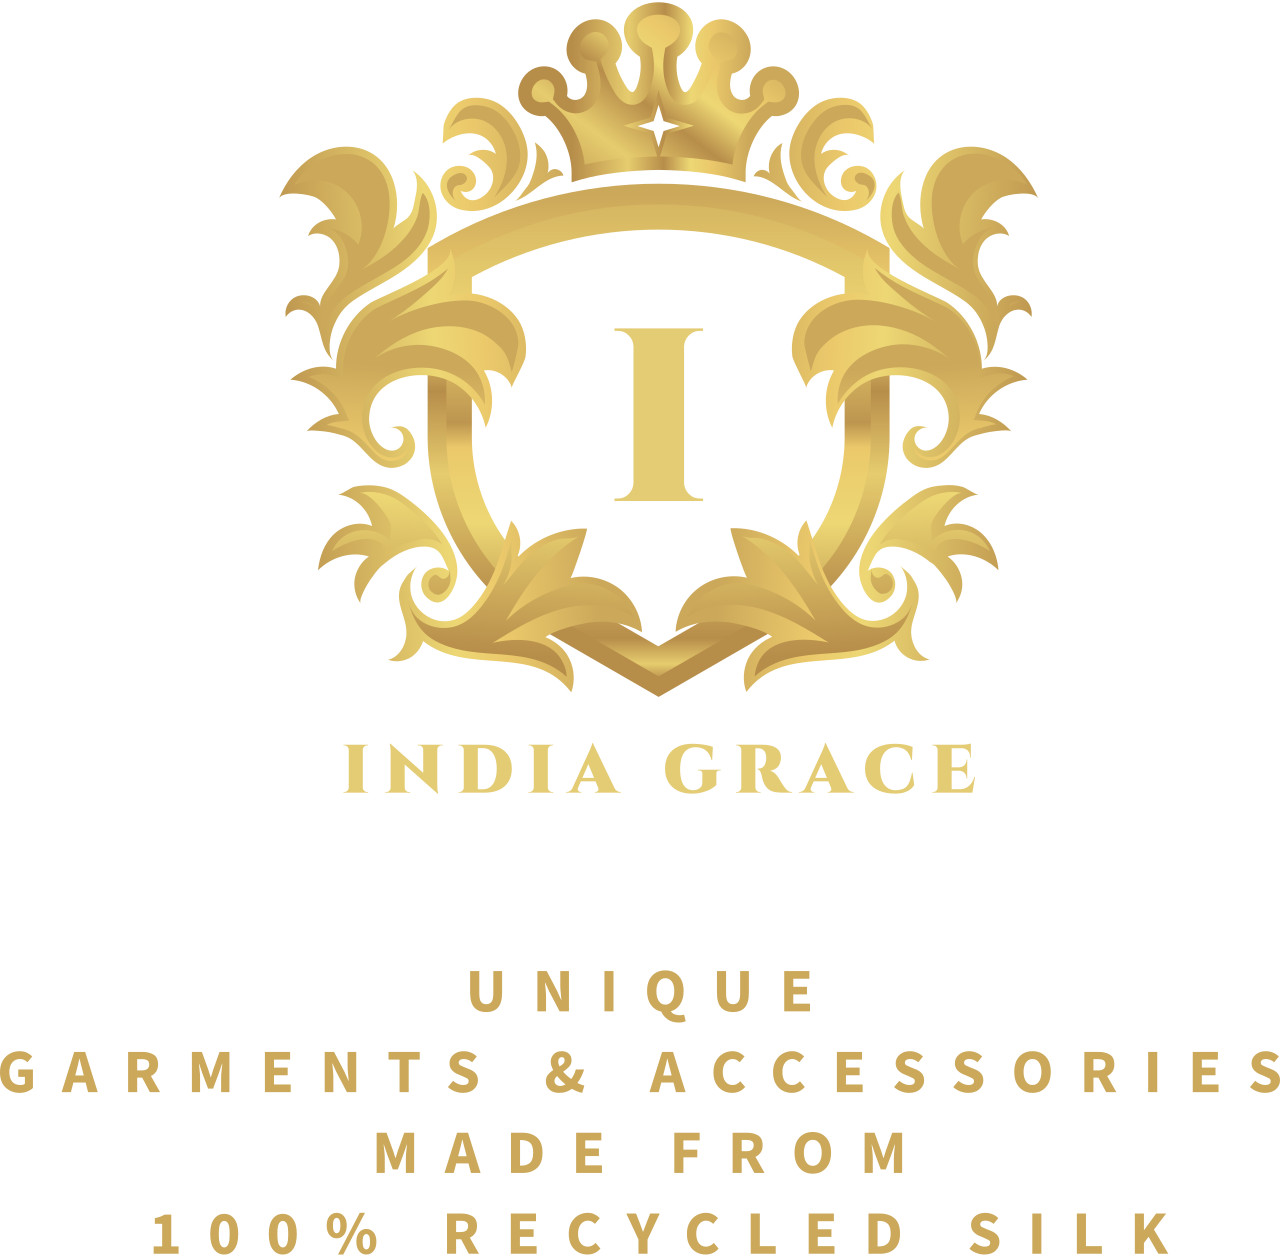 India Grace's logo